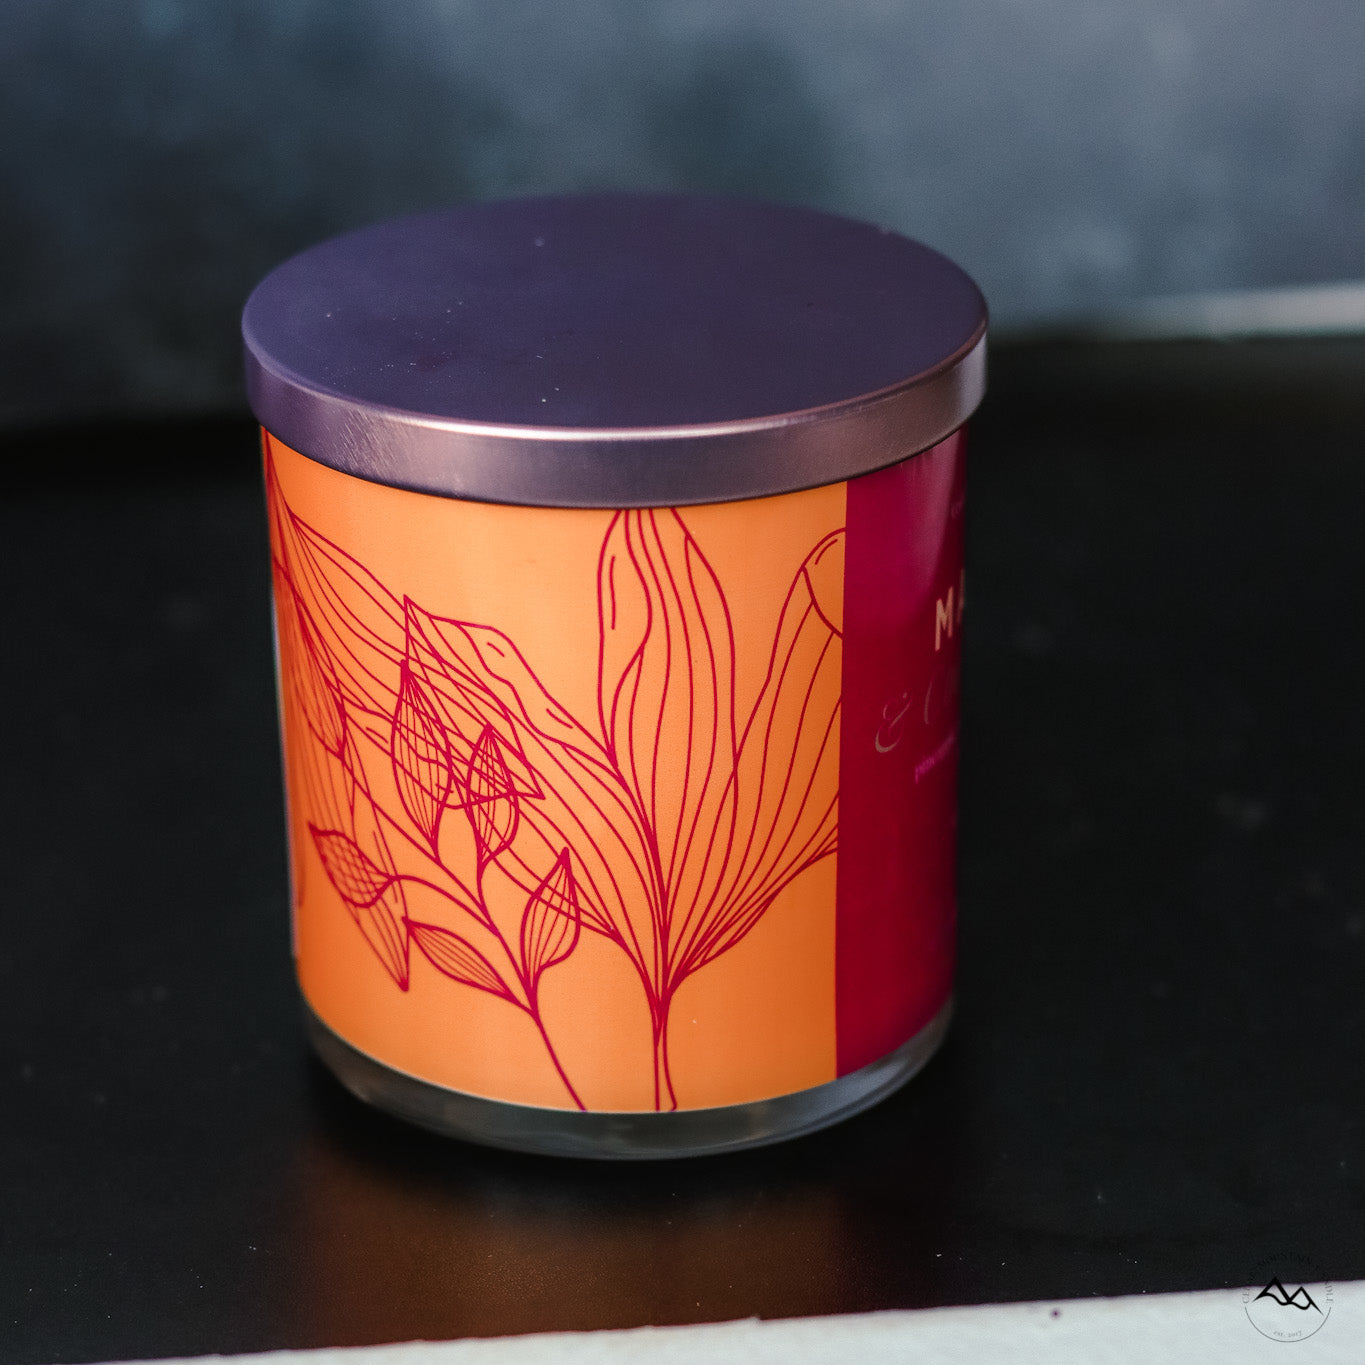 New Look! Mango & Coconut Milk - 9 oz Whiskey Jar Candle - Wrap Around Label